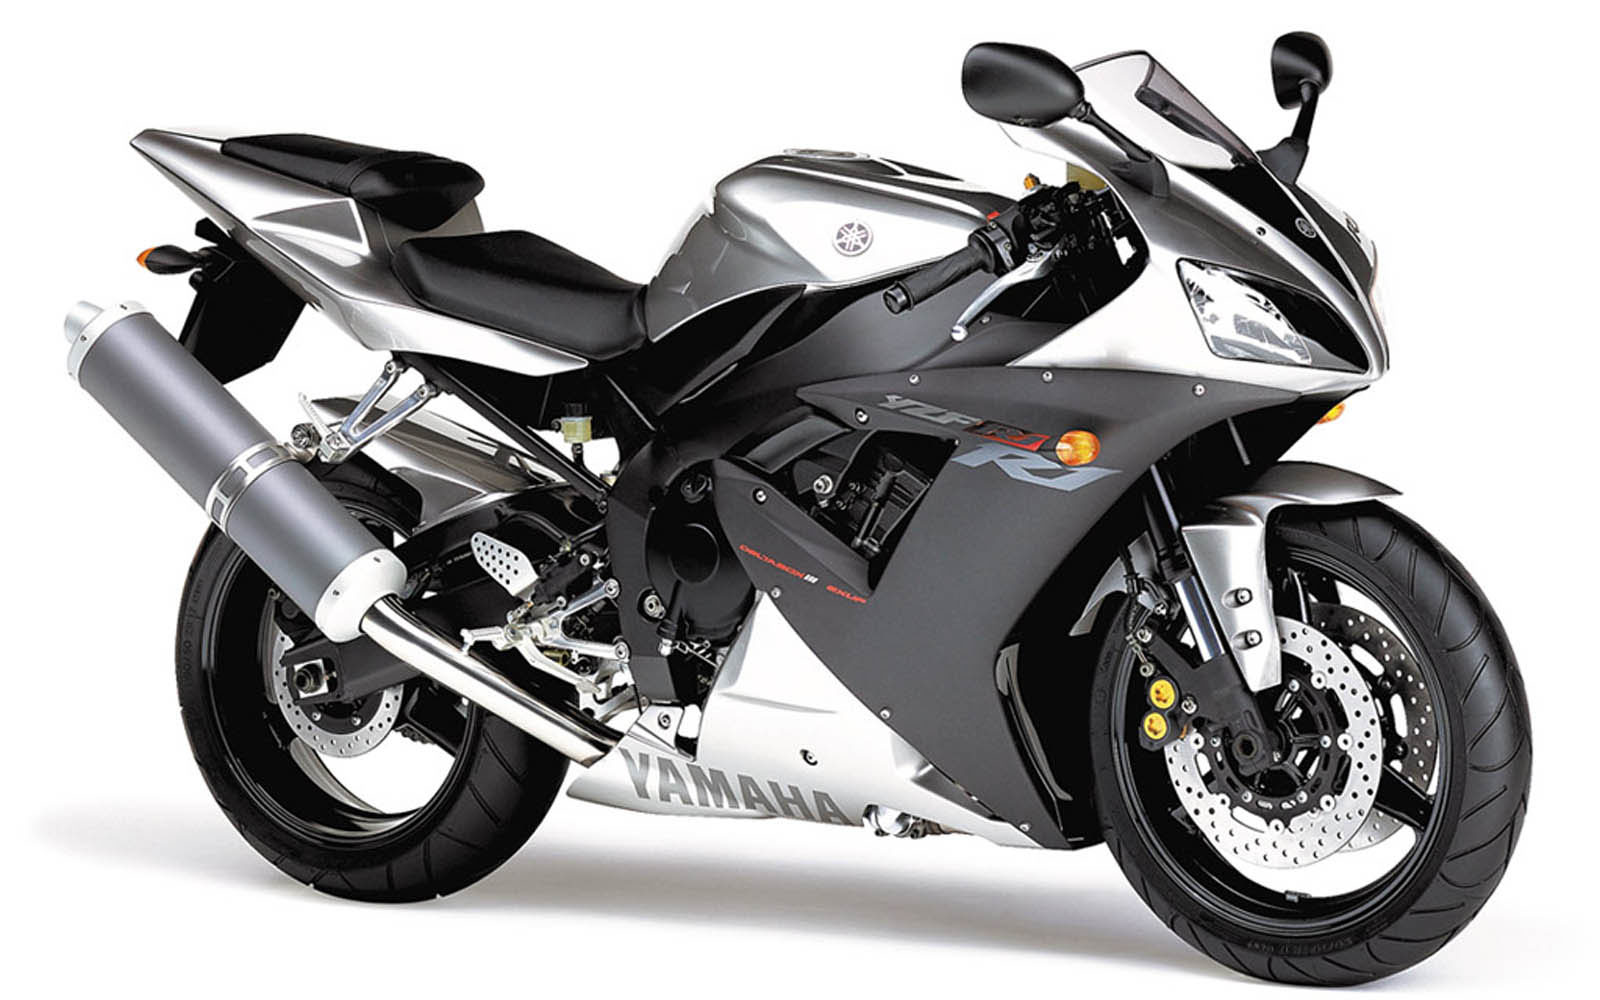 Desktop Wallpapers: Yamaha R1 Motorcycle Desktop Wallpapers